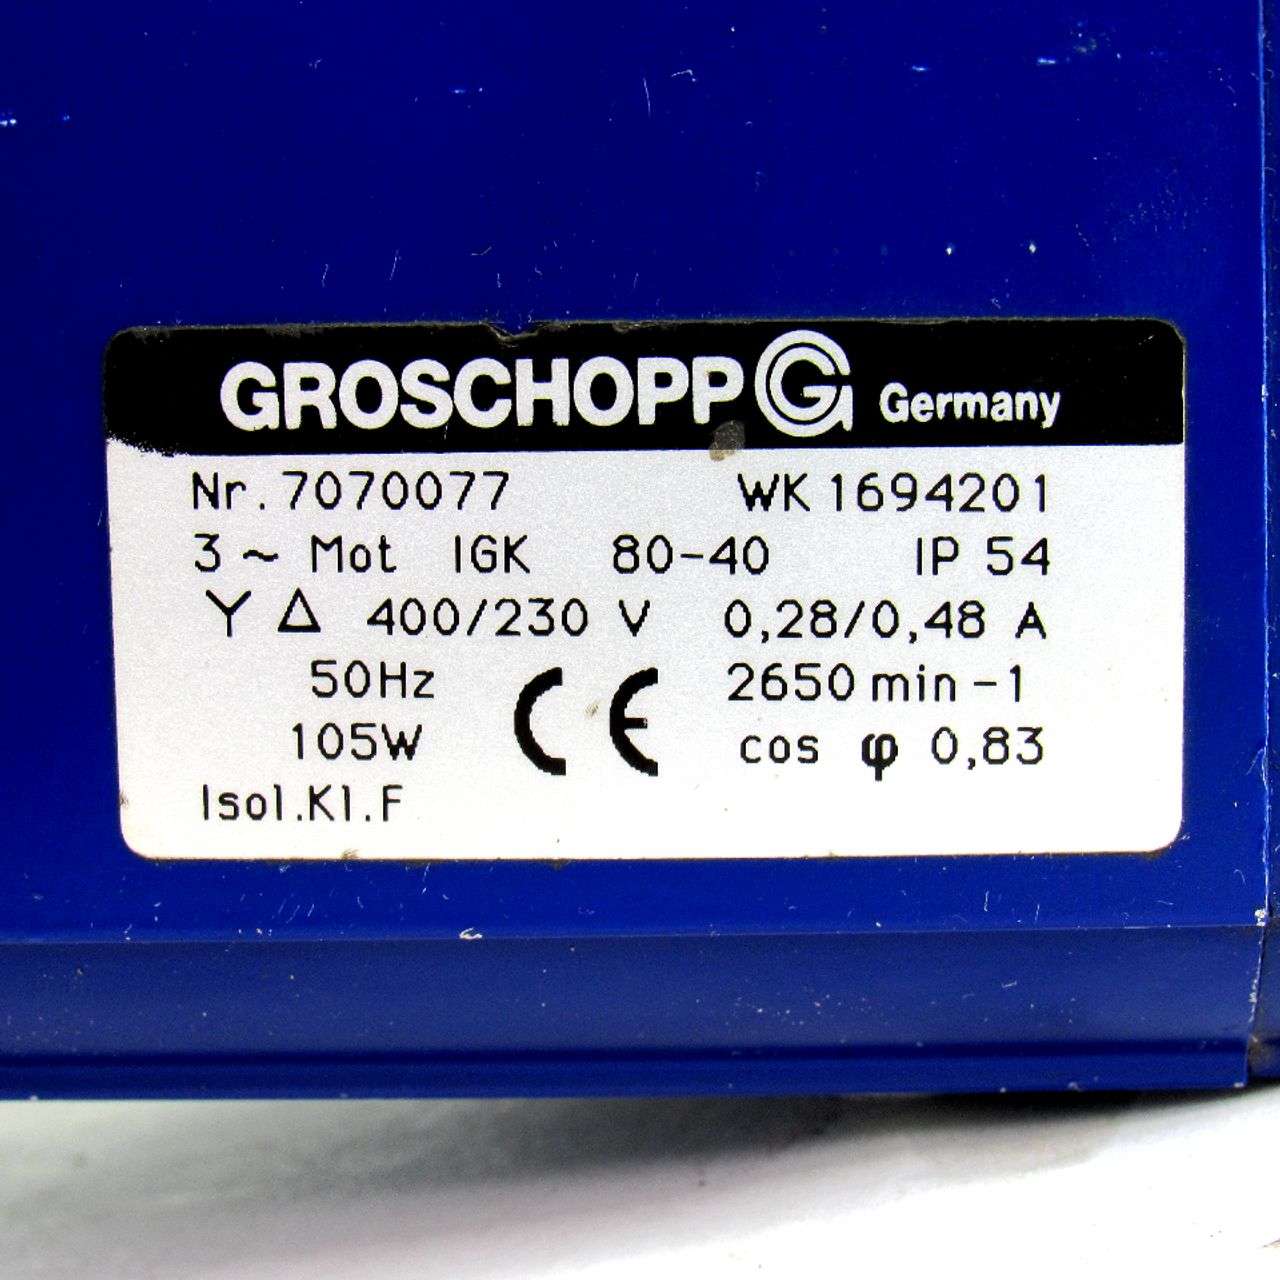 Groschopp WK 1694201 Gearmotor, 3-Mot, 400/230V, 0.28/0.48 Amp